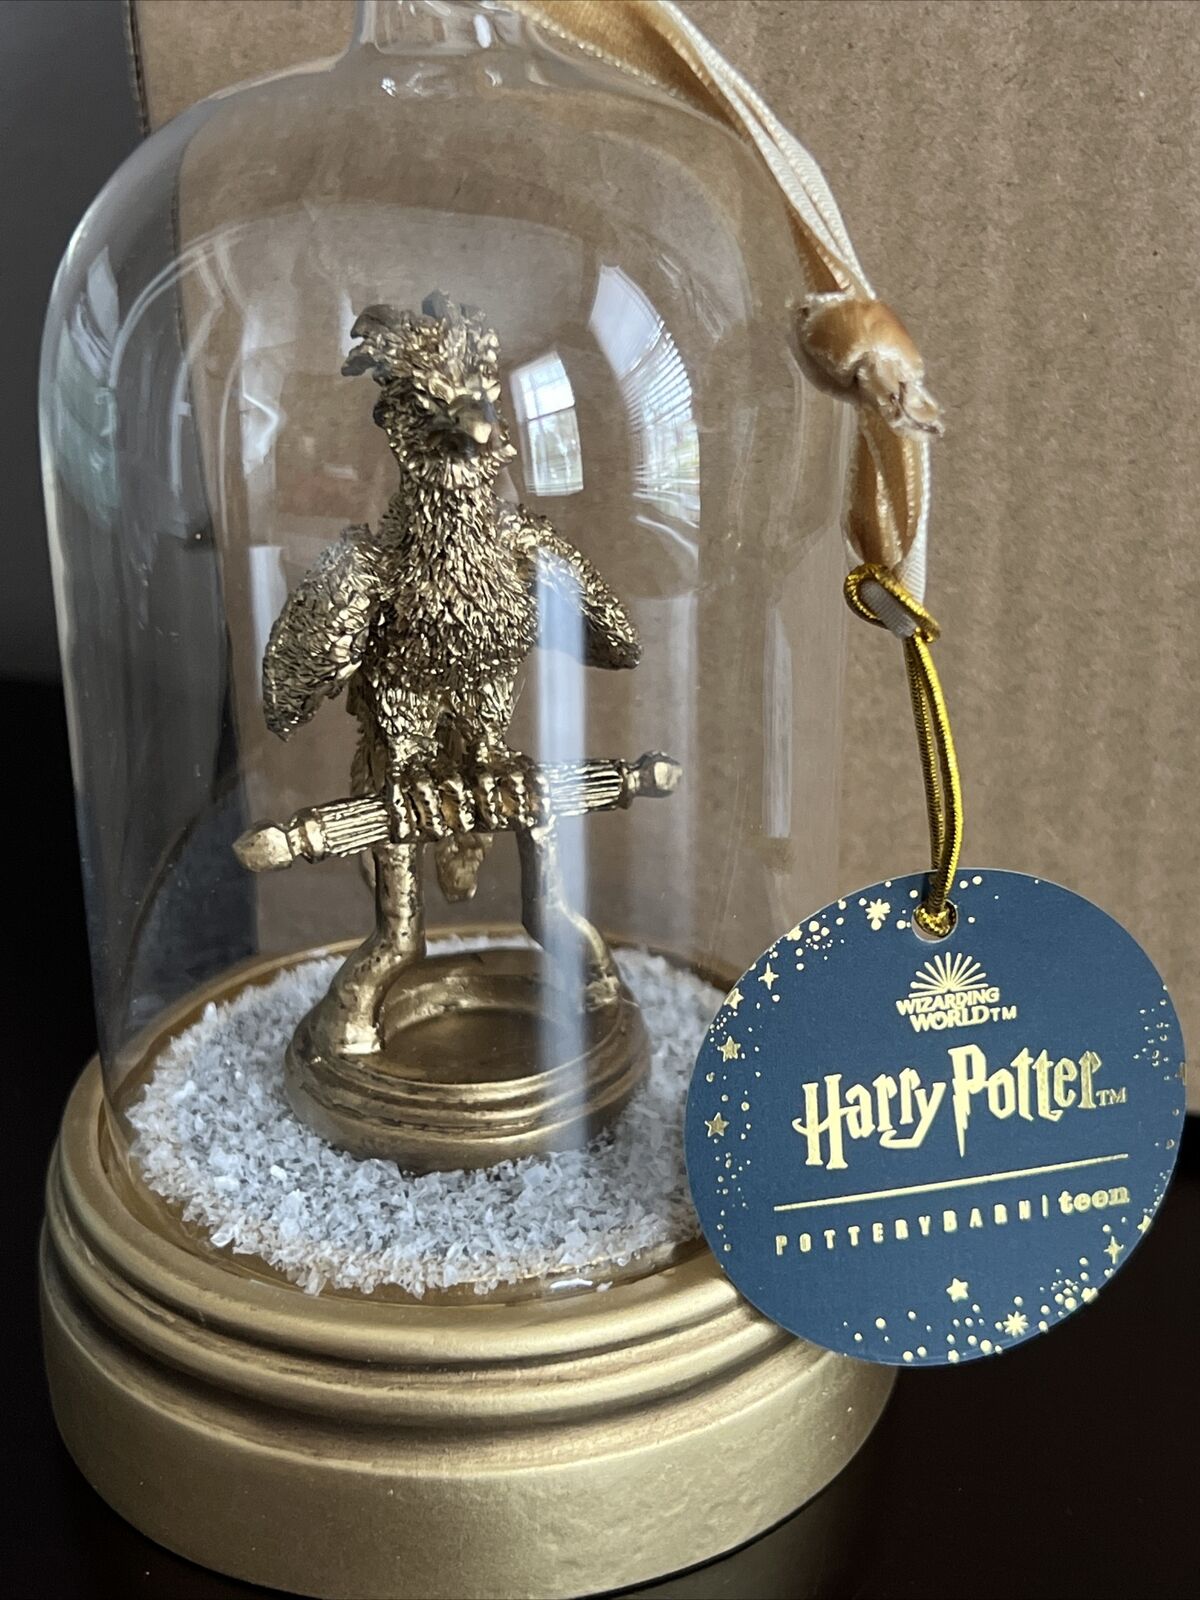 New Pottery Barn Teen Harry Potter Light-Up Cloche Ornament - Gold Phoenix